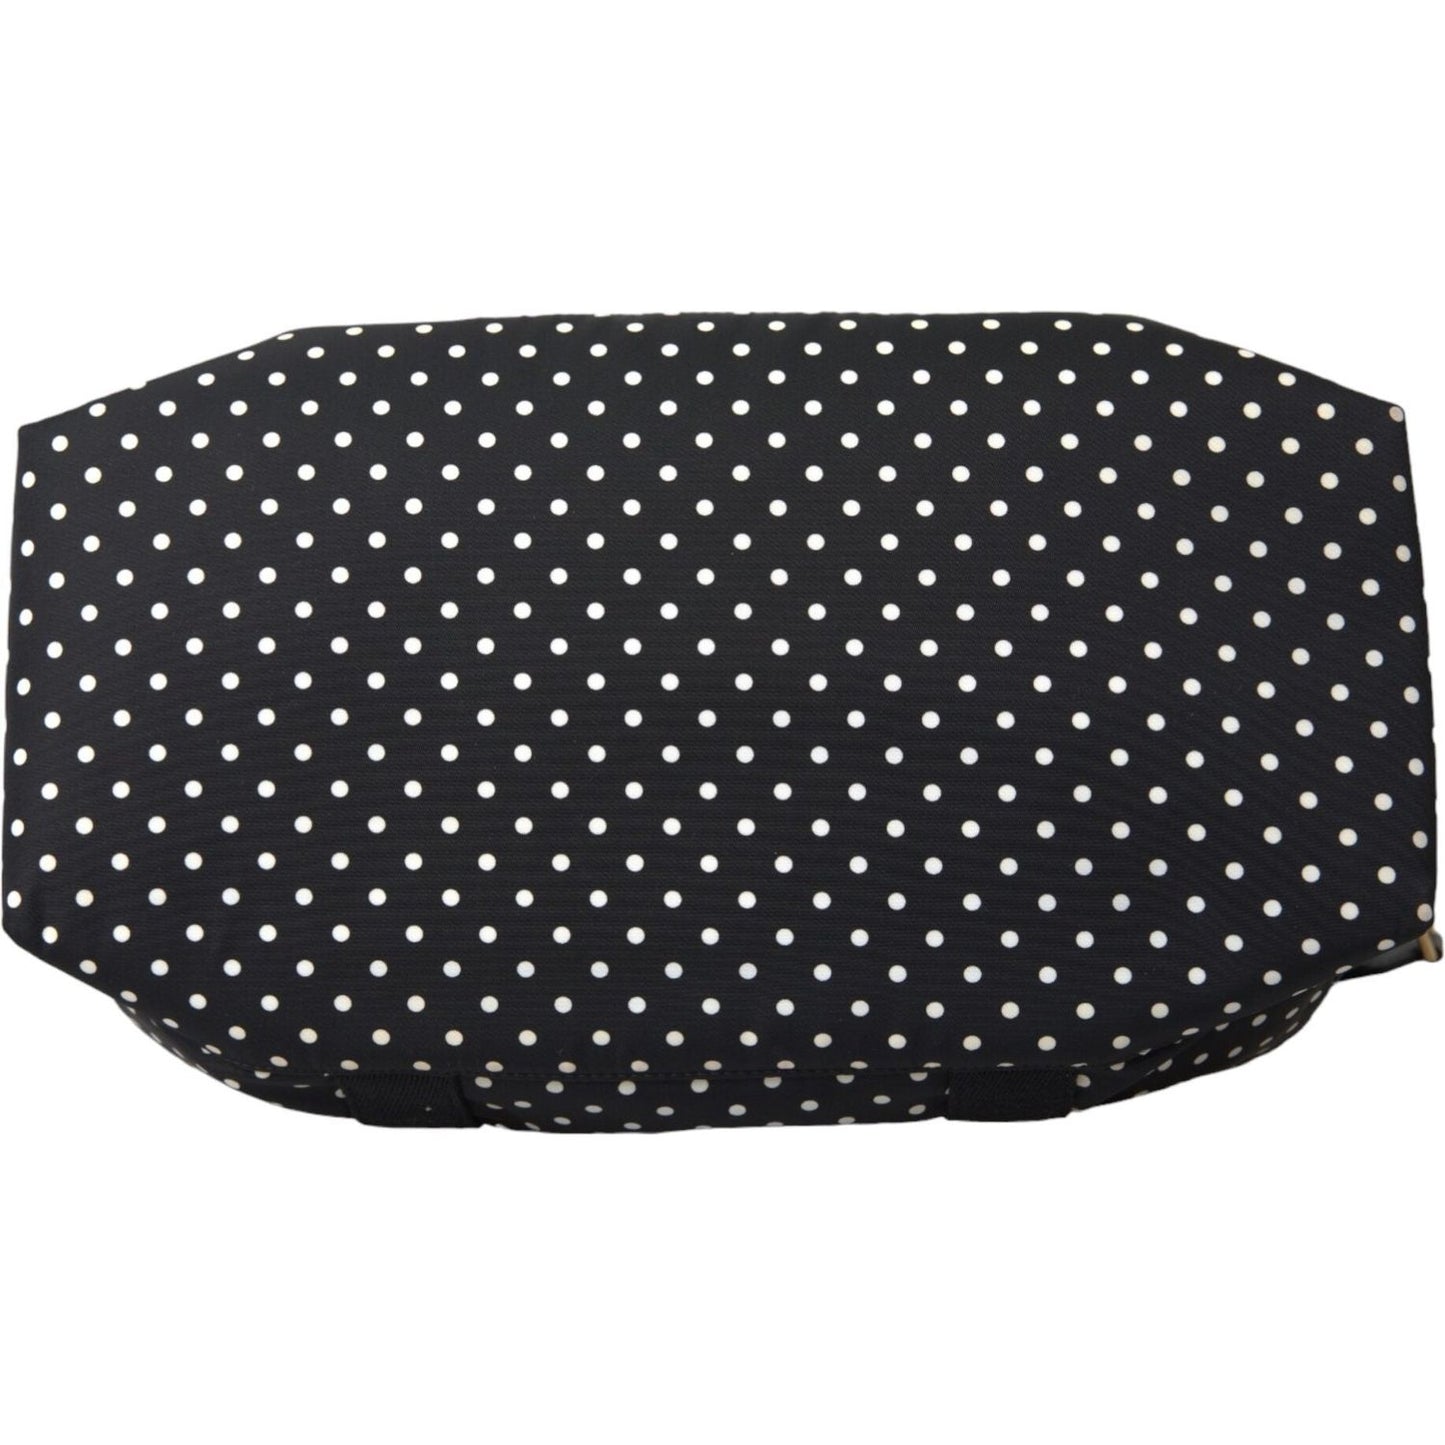 Black Polka Dot Changing Mat Baby Duffle Bag